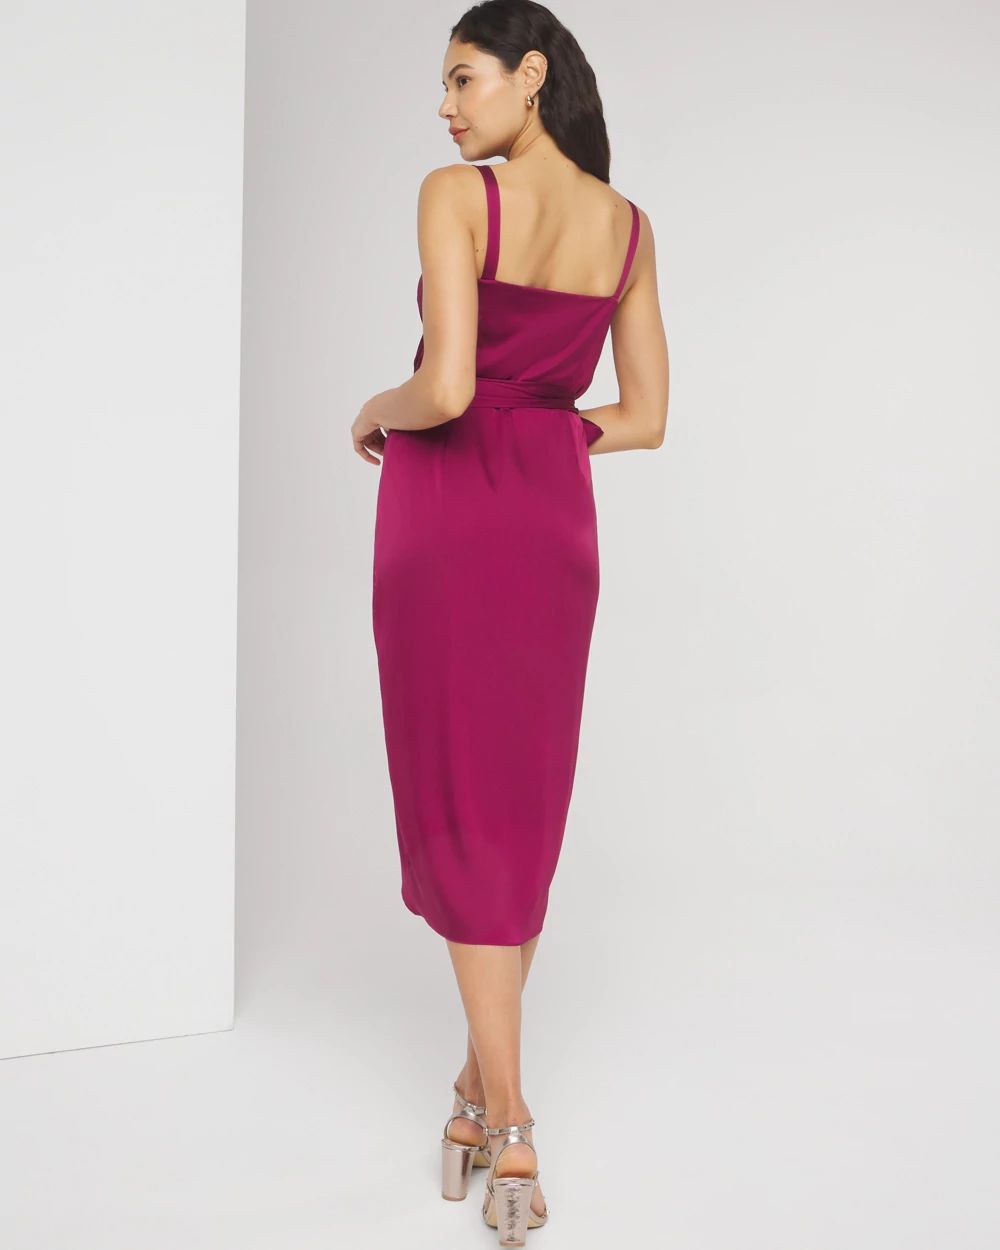 Sleeveless V-Neck Satin Wrap Dress click to view larger image.